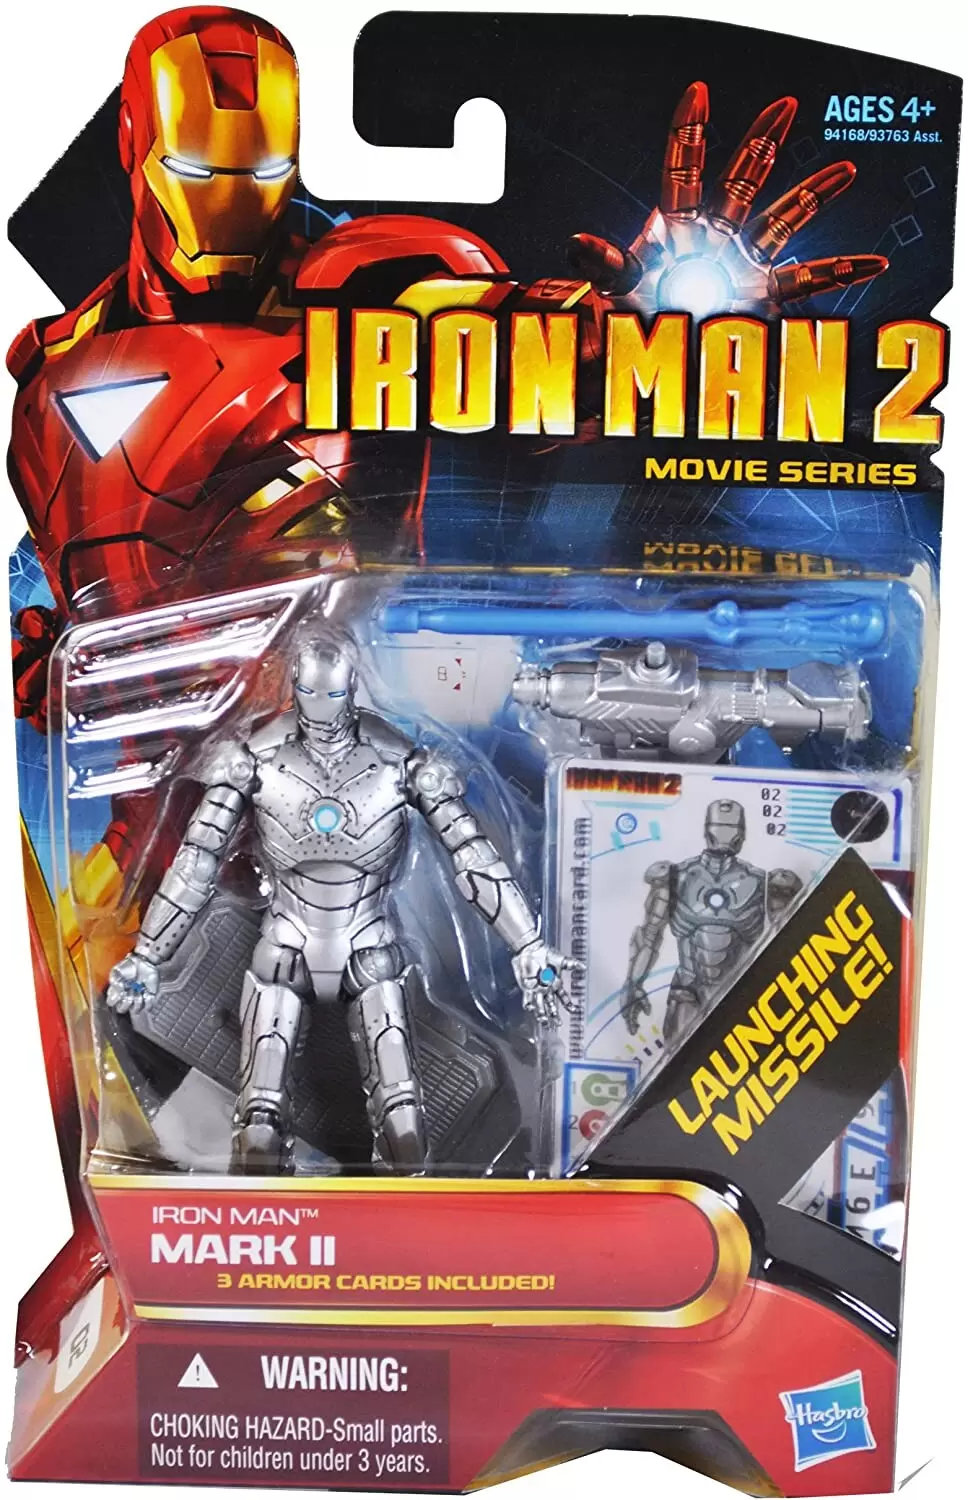 Iron Man 2 - Movie & Comic Series - Iron Man Mark II